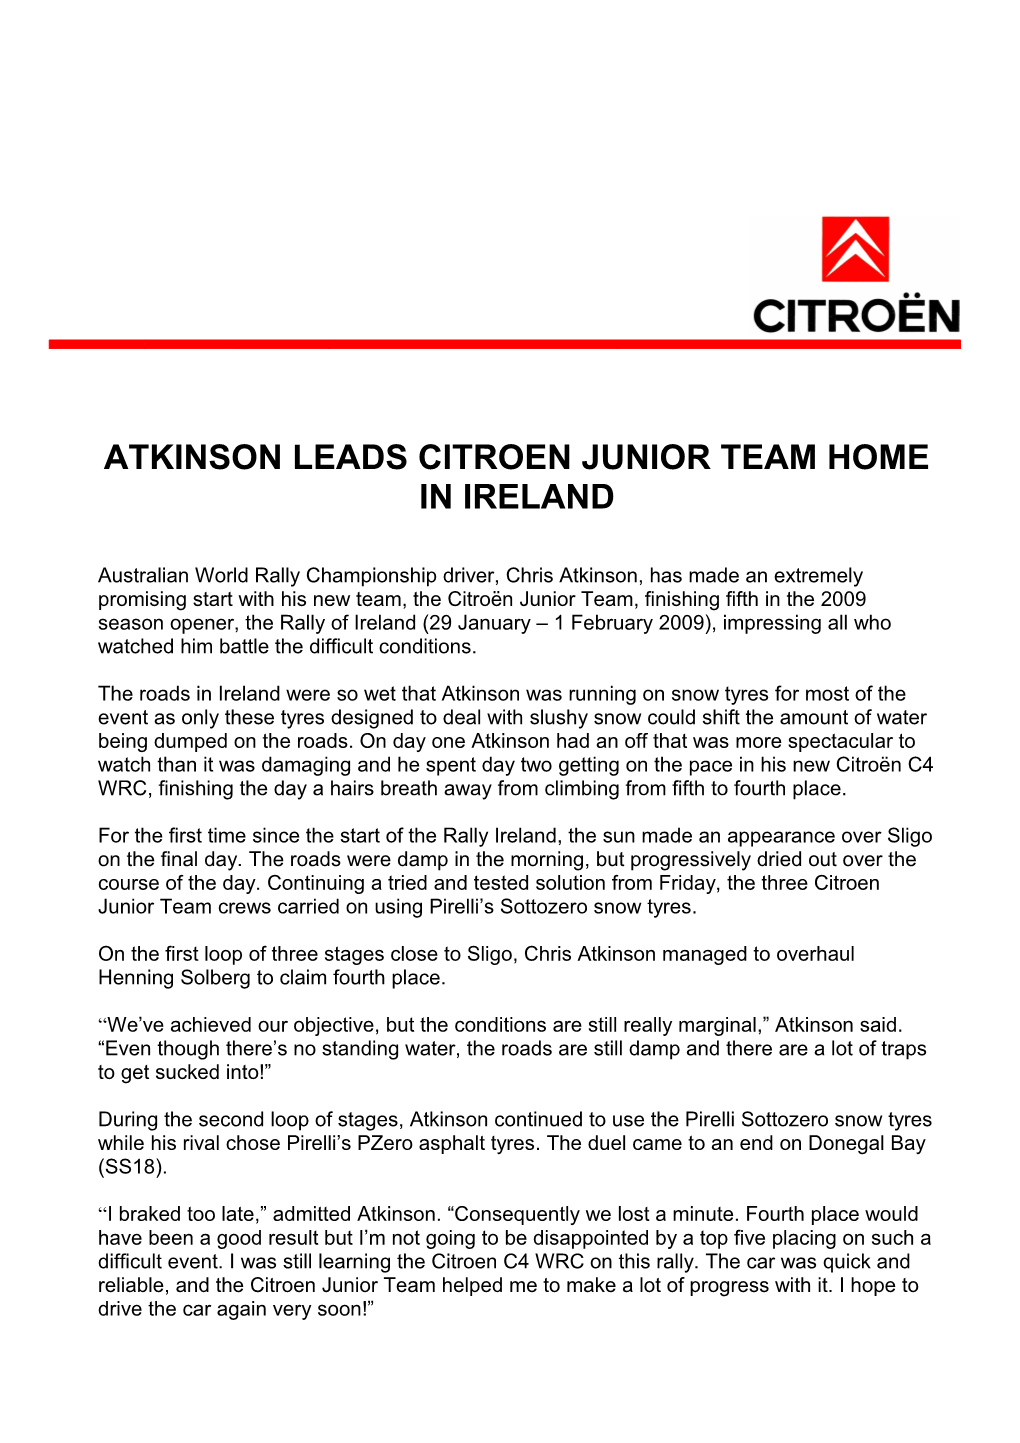 Atkinson Leads Citroen Junior Team Home in Ireland